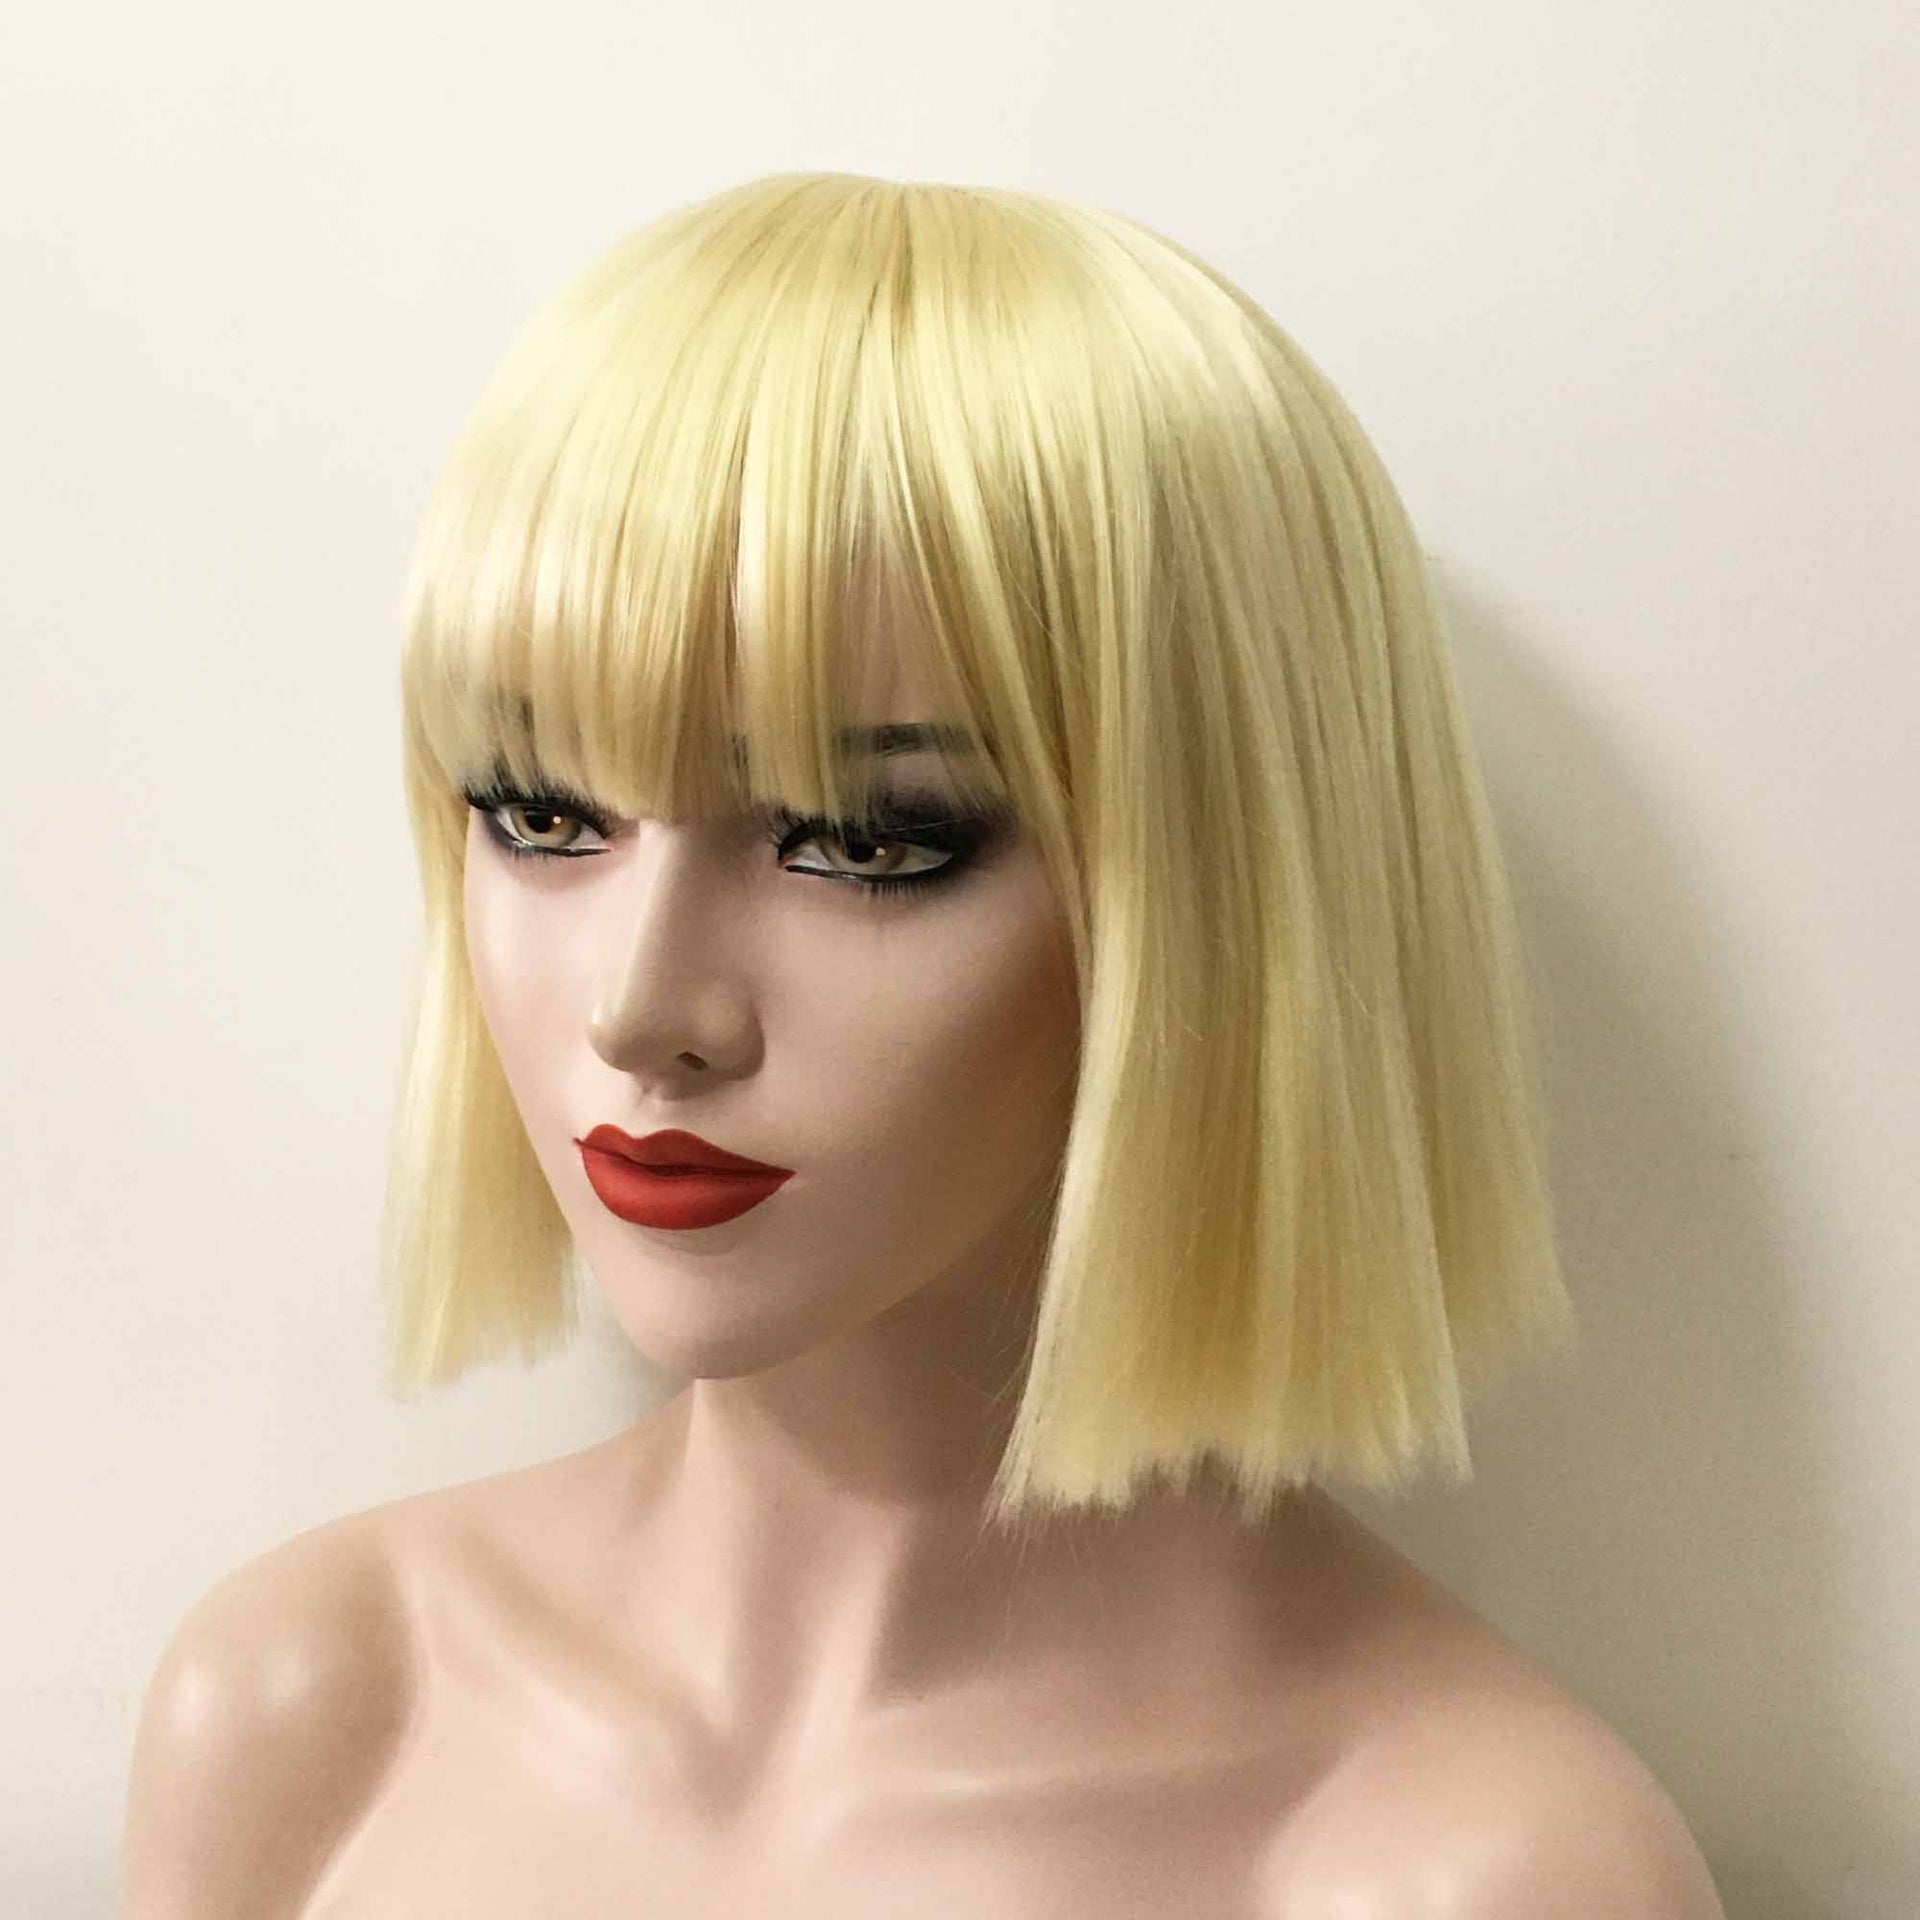 nevermindyrhead Women Blonde Short Straight Bob Yaki Fringe Bangs Wig